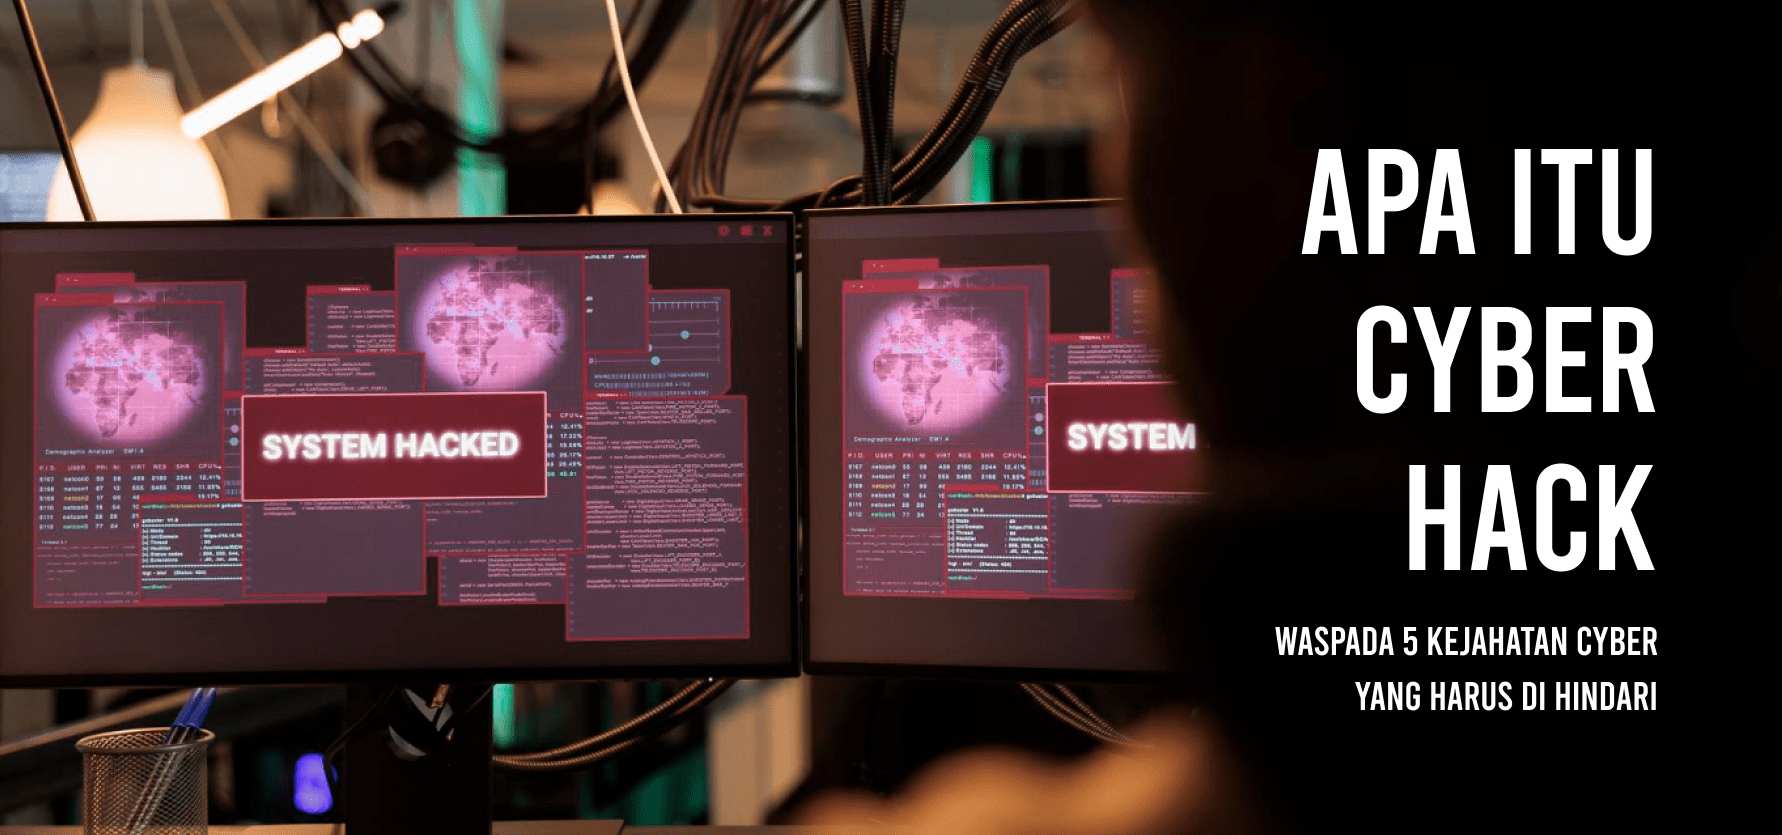 Cyber Hack: Waspada 5 Kejahatan Cyber!